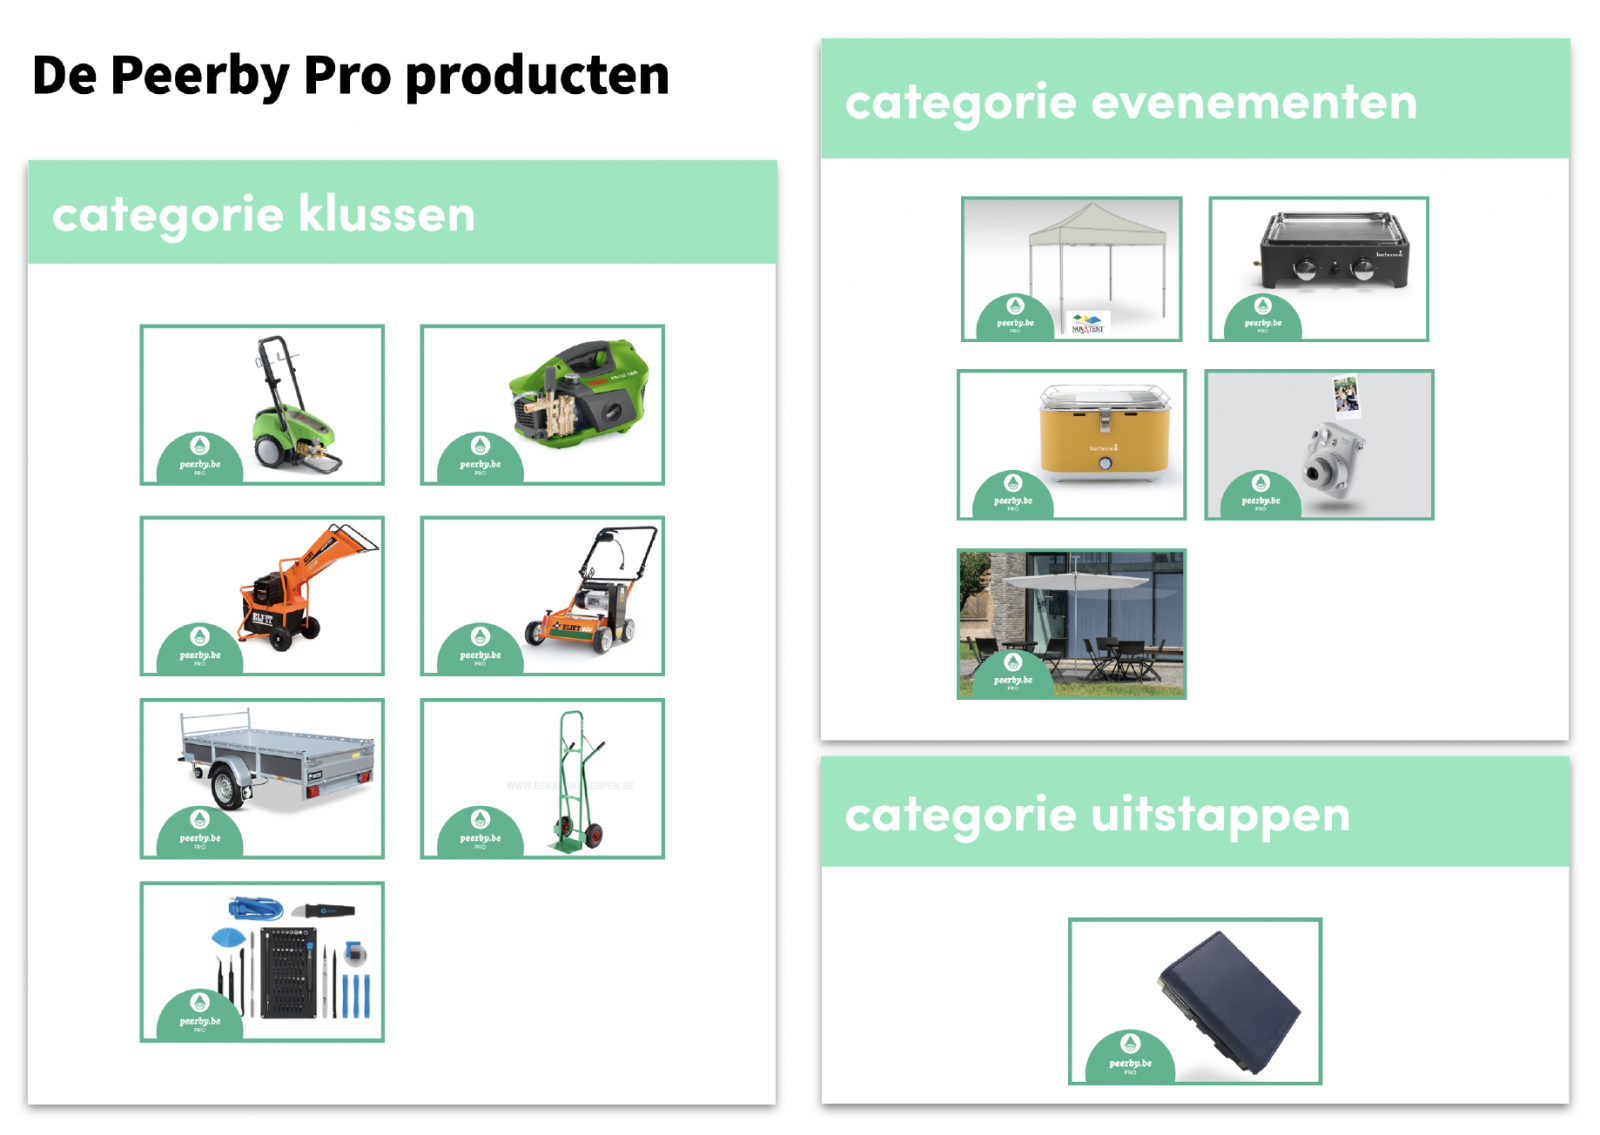 De Peerby Pro producten